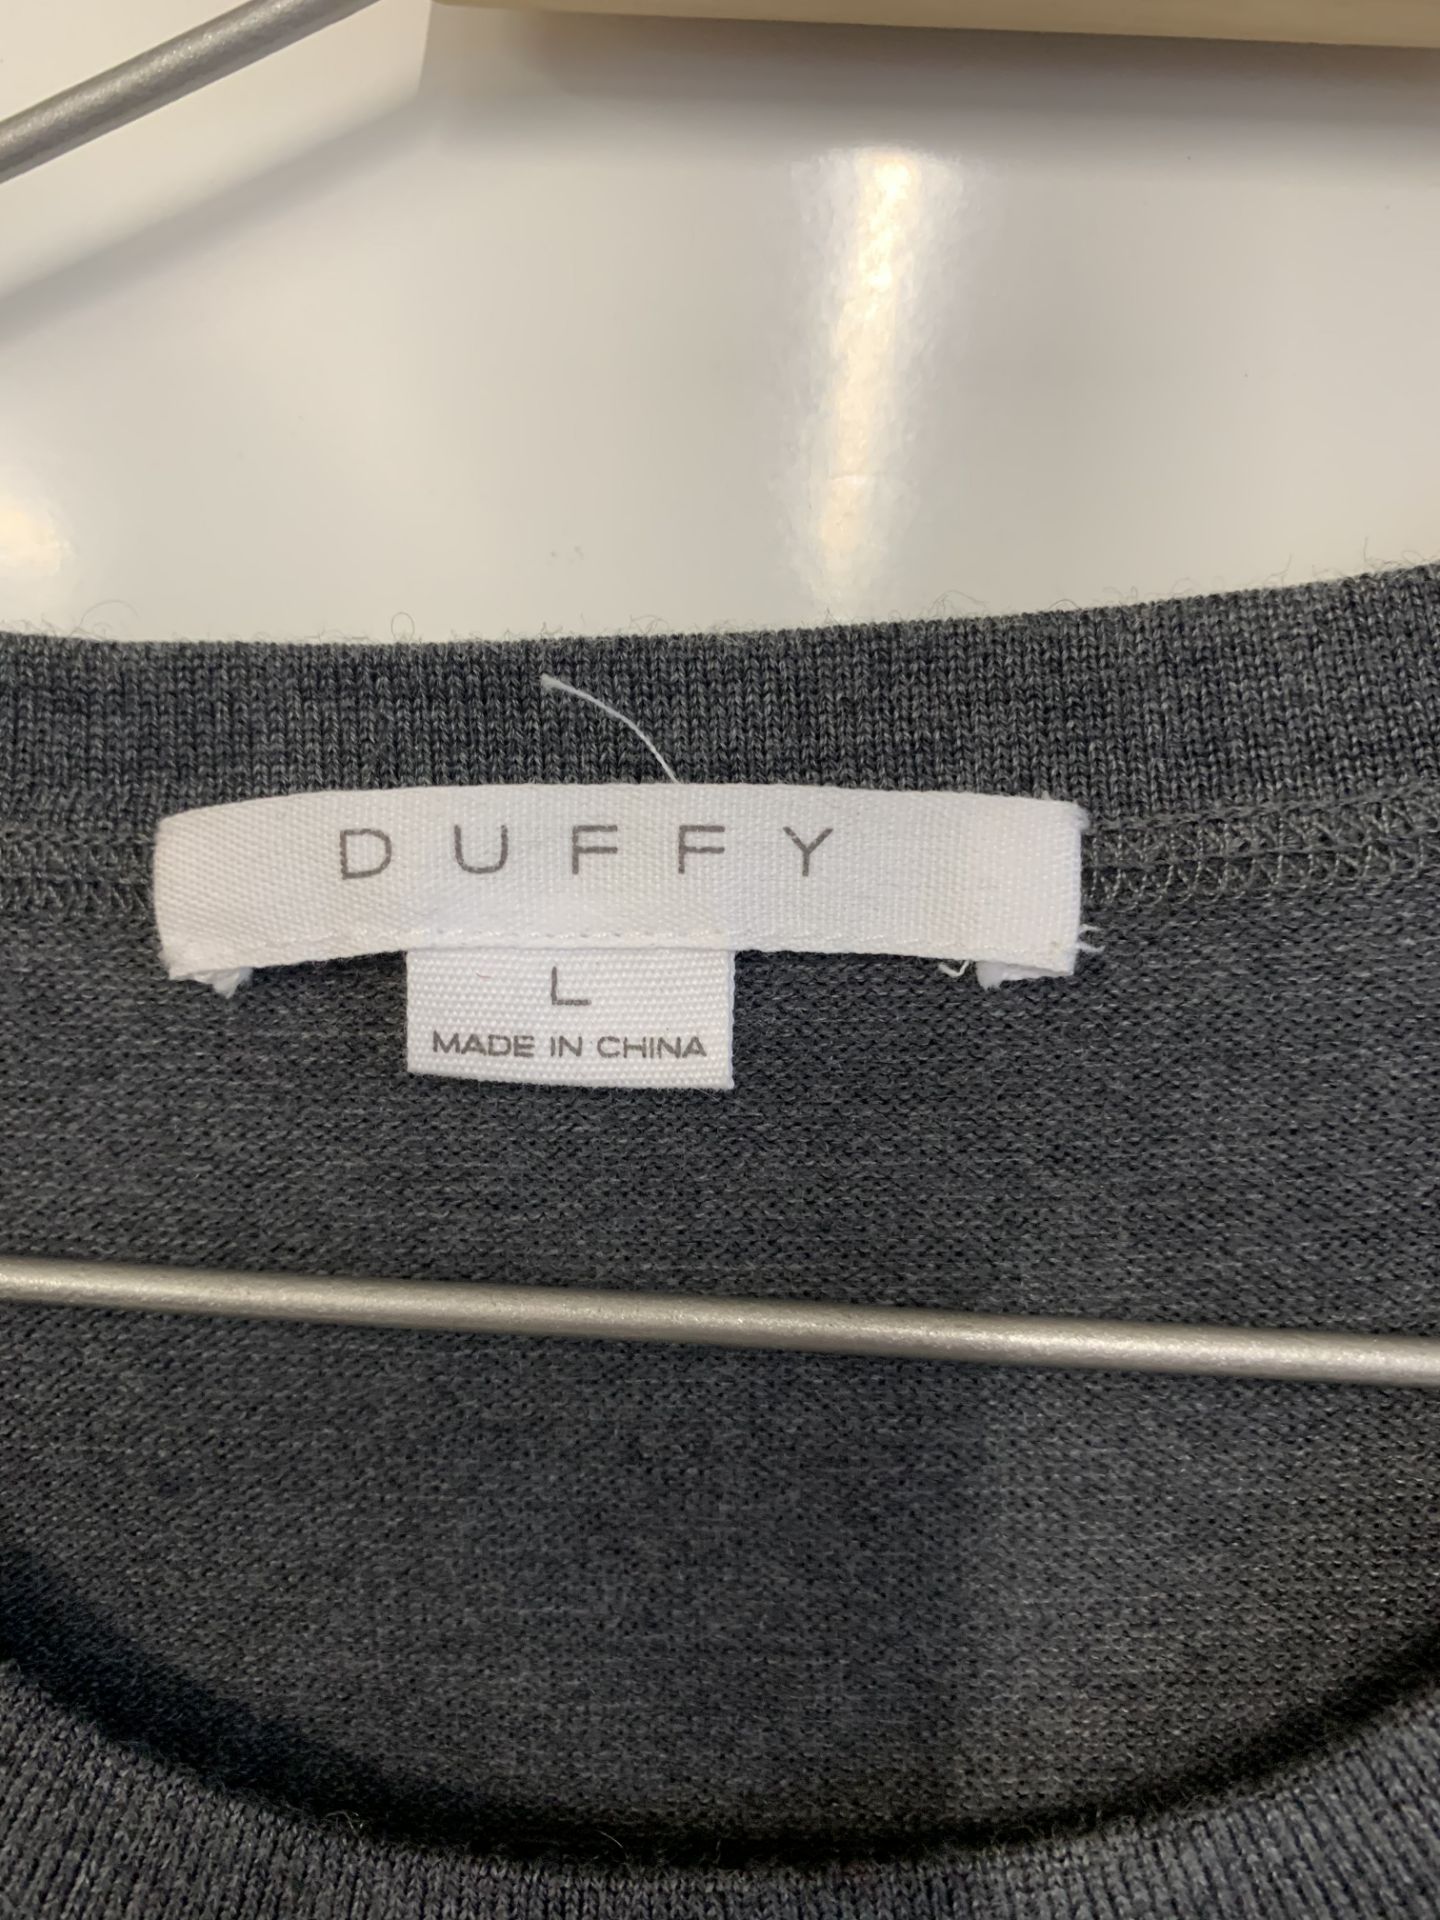 Duffy clothing Round Neck Sweater - Image 2 of 2